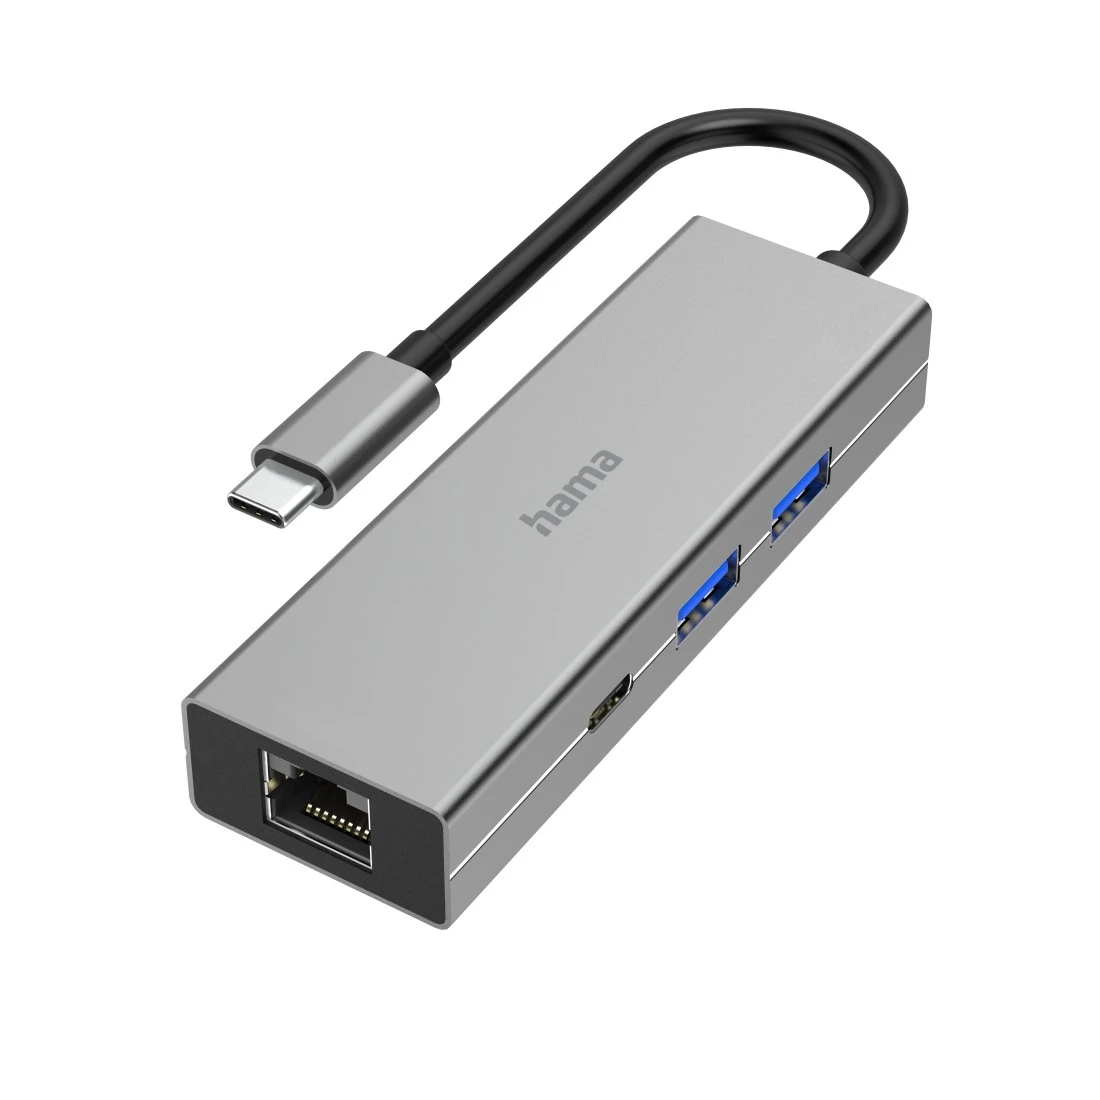 Hub USB-C, multiport, 4 ports, 2 USB-A, USB-C, LAN/Ether.